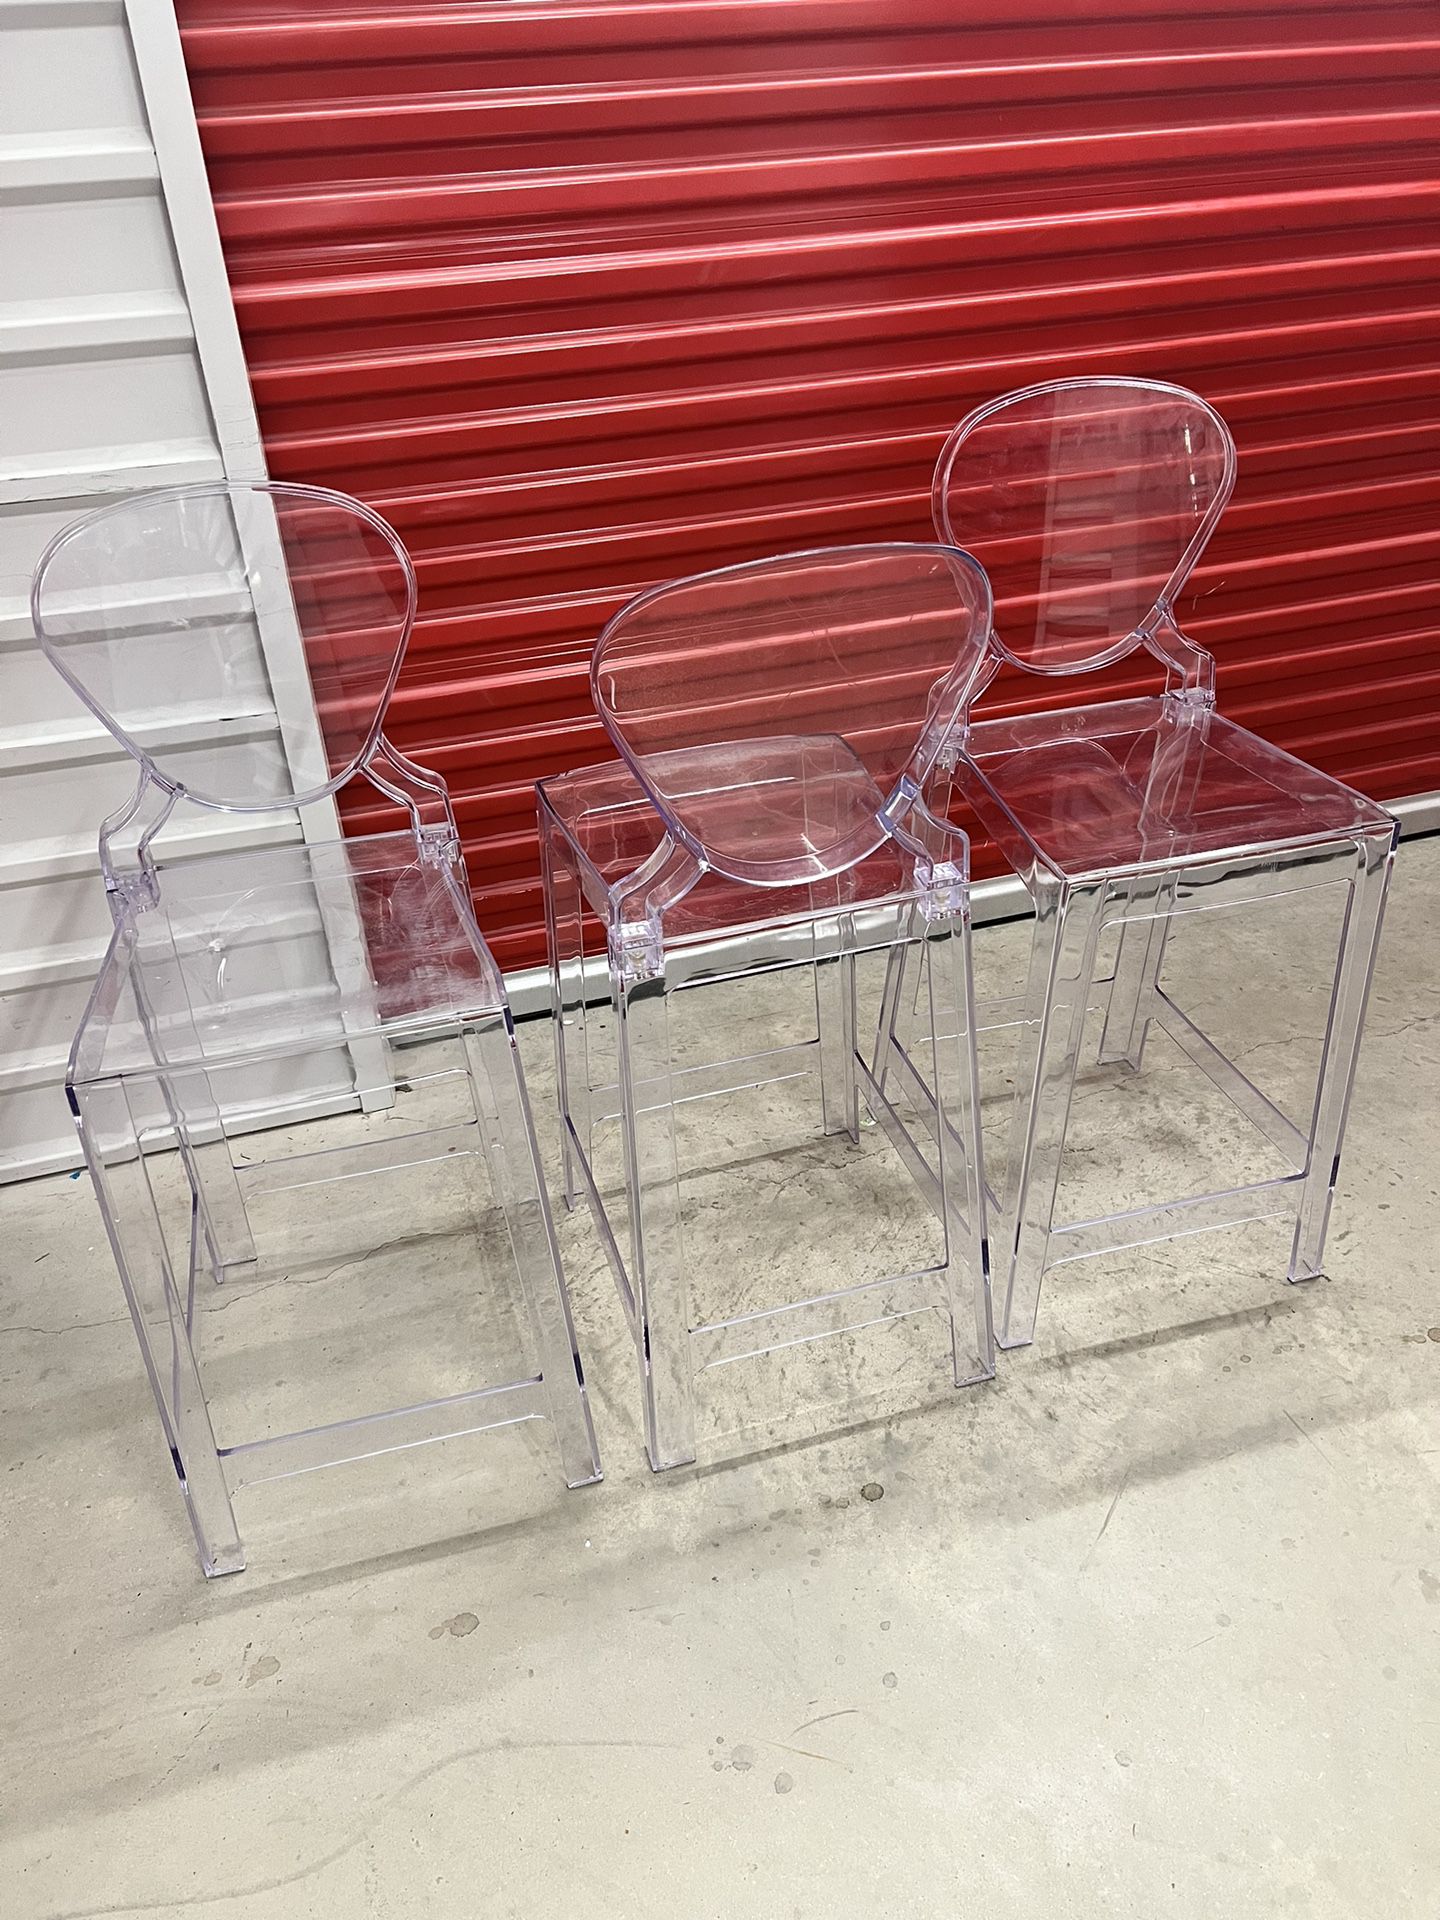 3 Clear Acrylic Chairs 